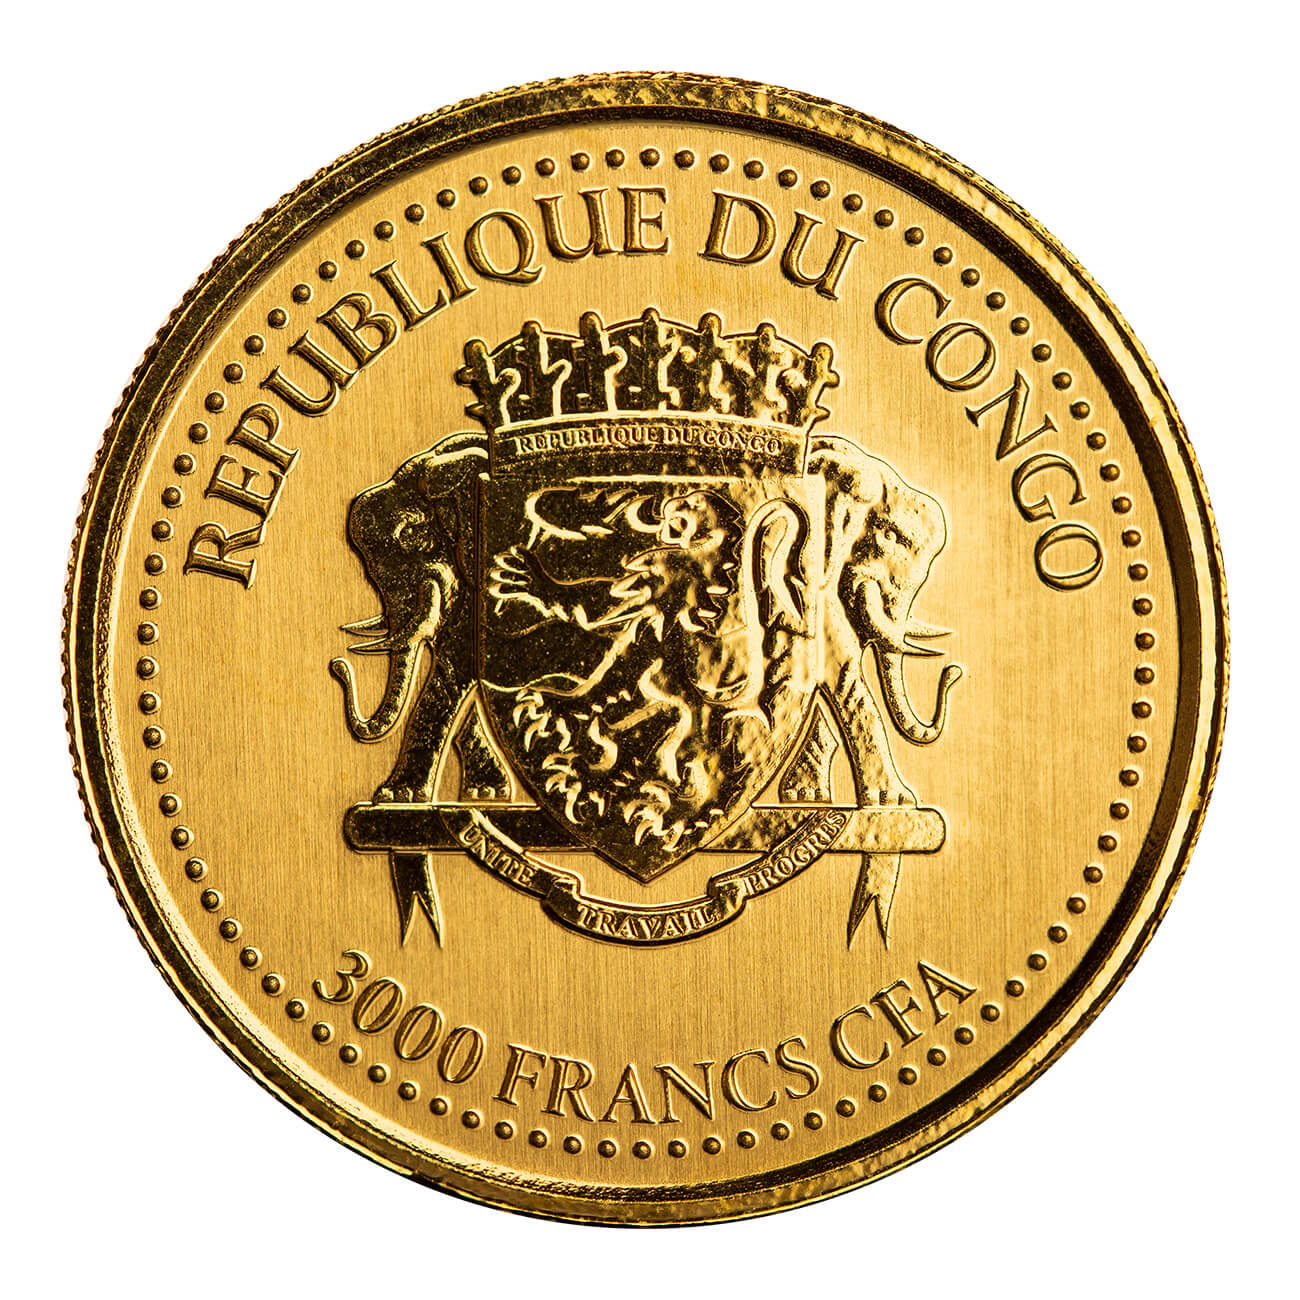 2022 Congo Silverback Gorilla 1 Oz Gold Bu Coin Scottsdale Mint 01